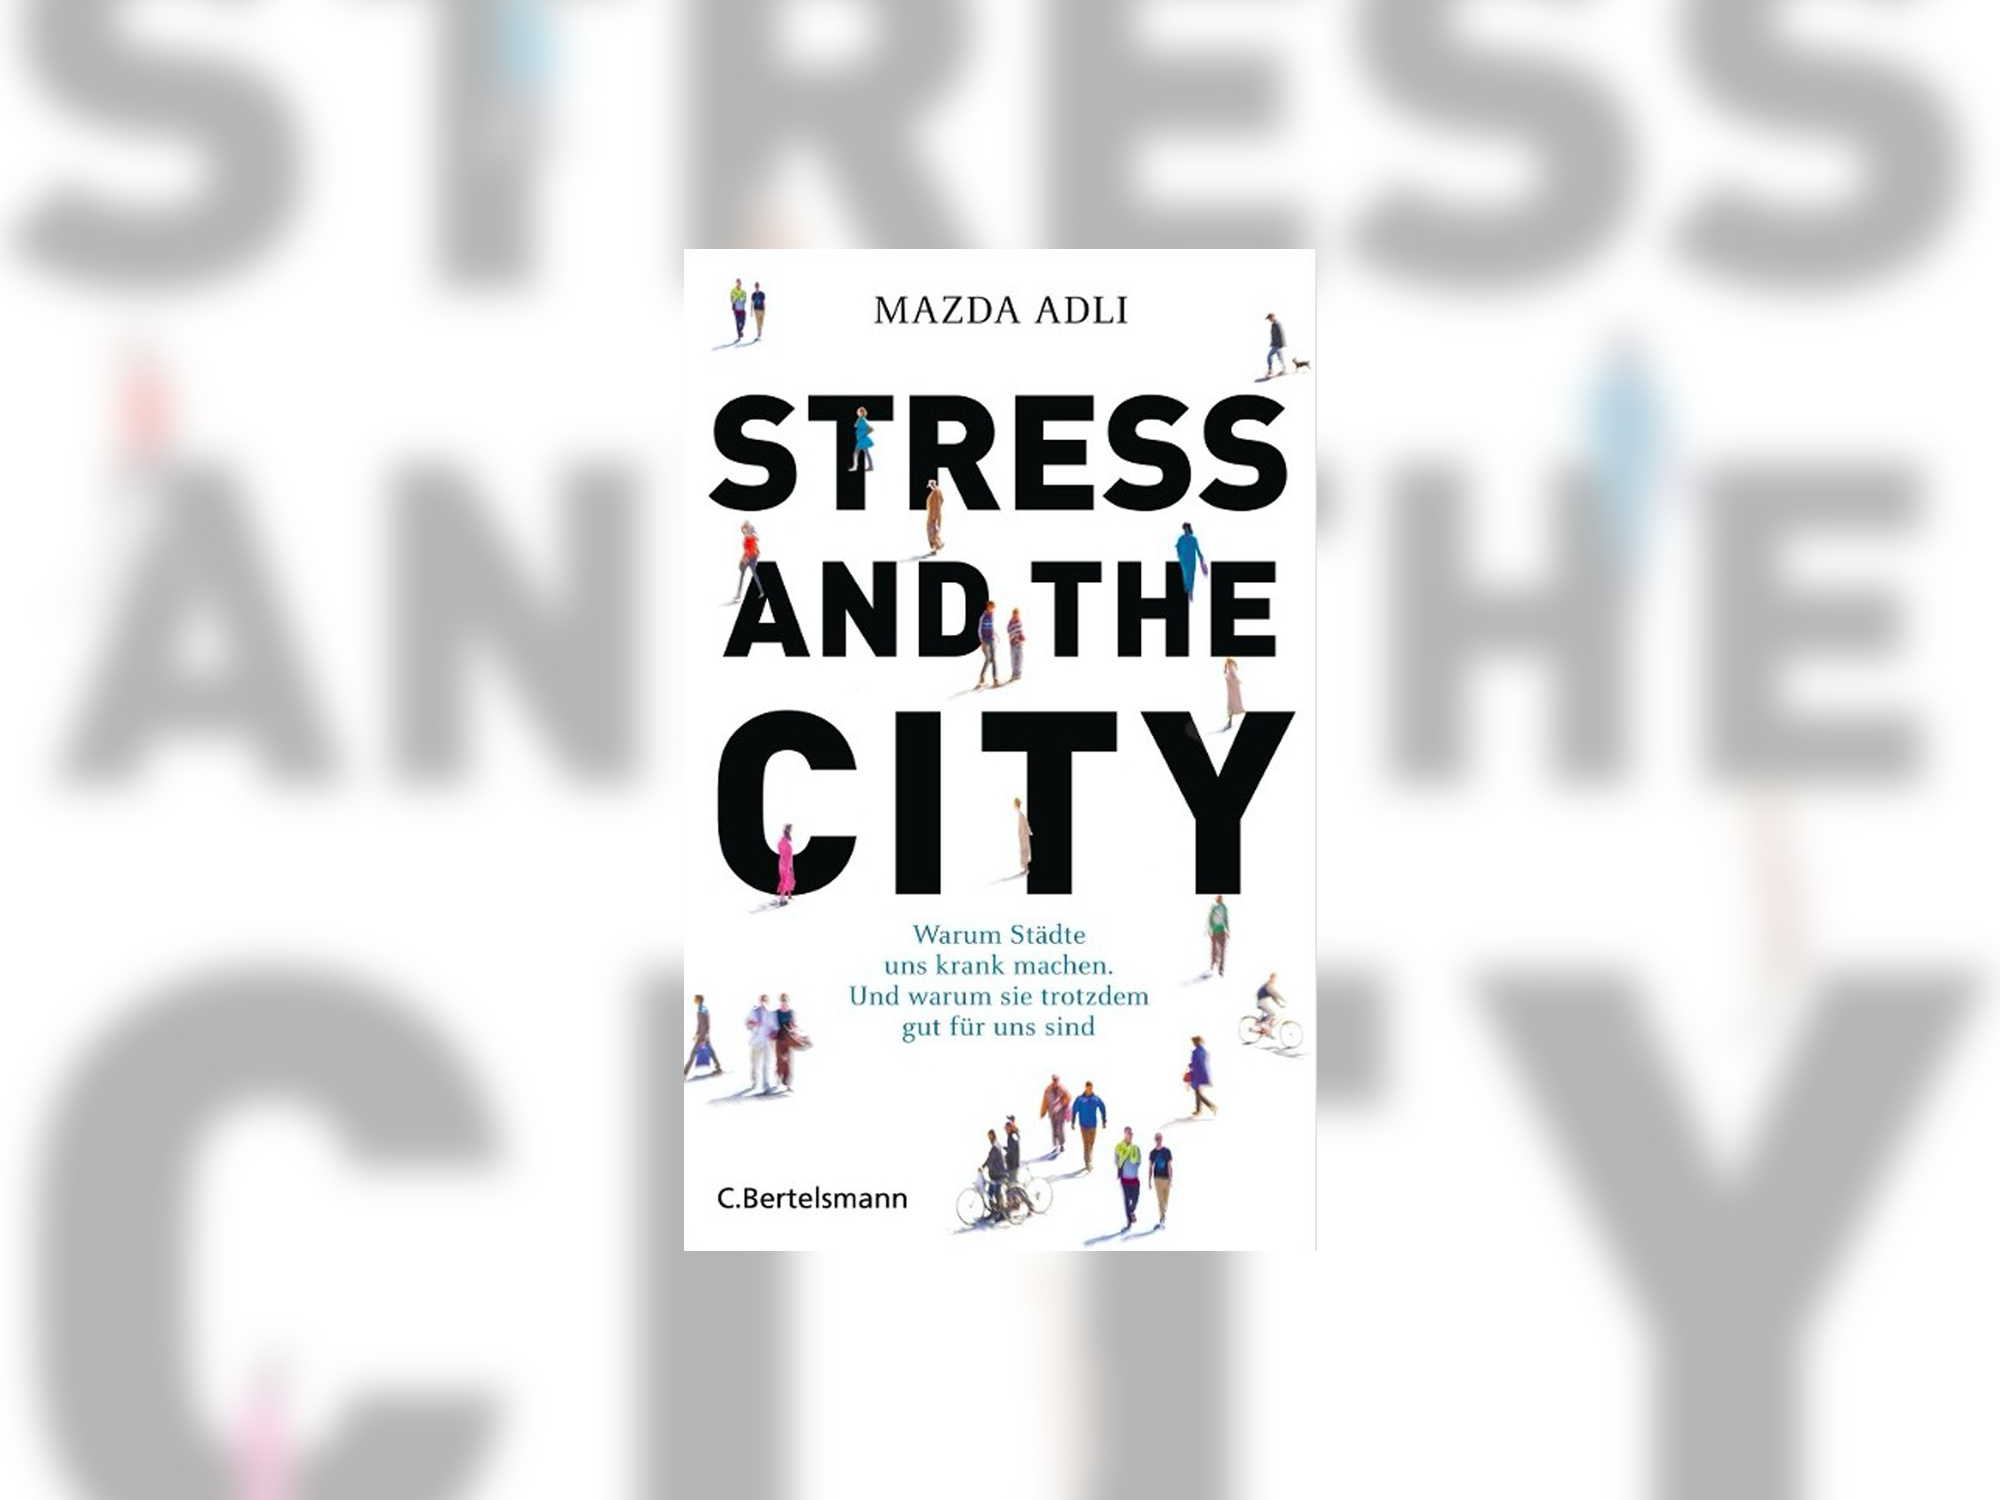 MAZDA ADLI – STRESS AND THE CITY